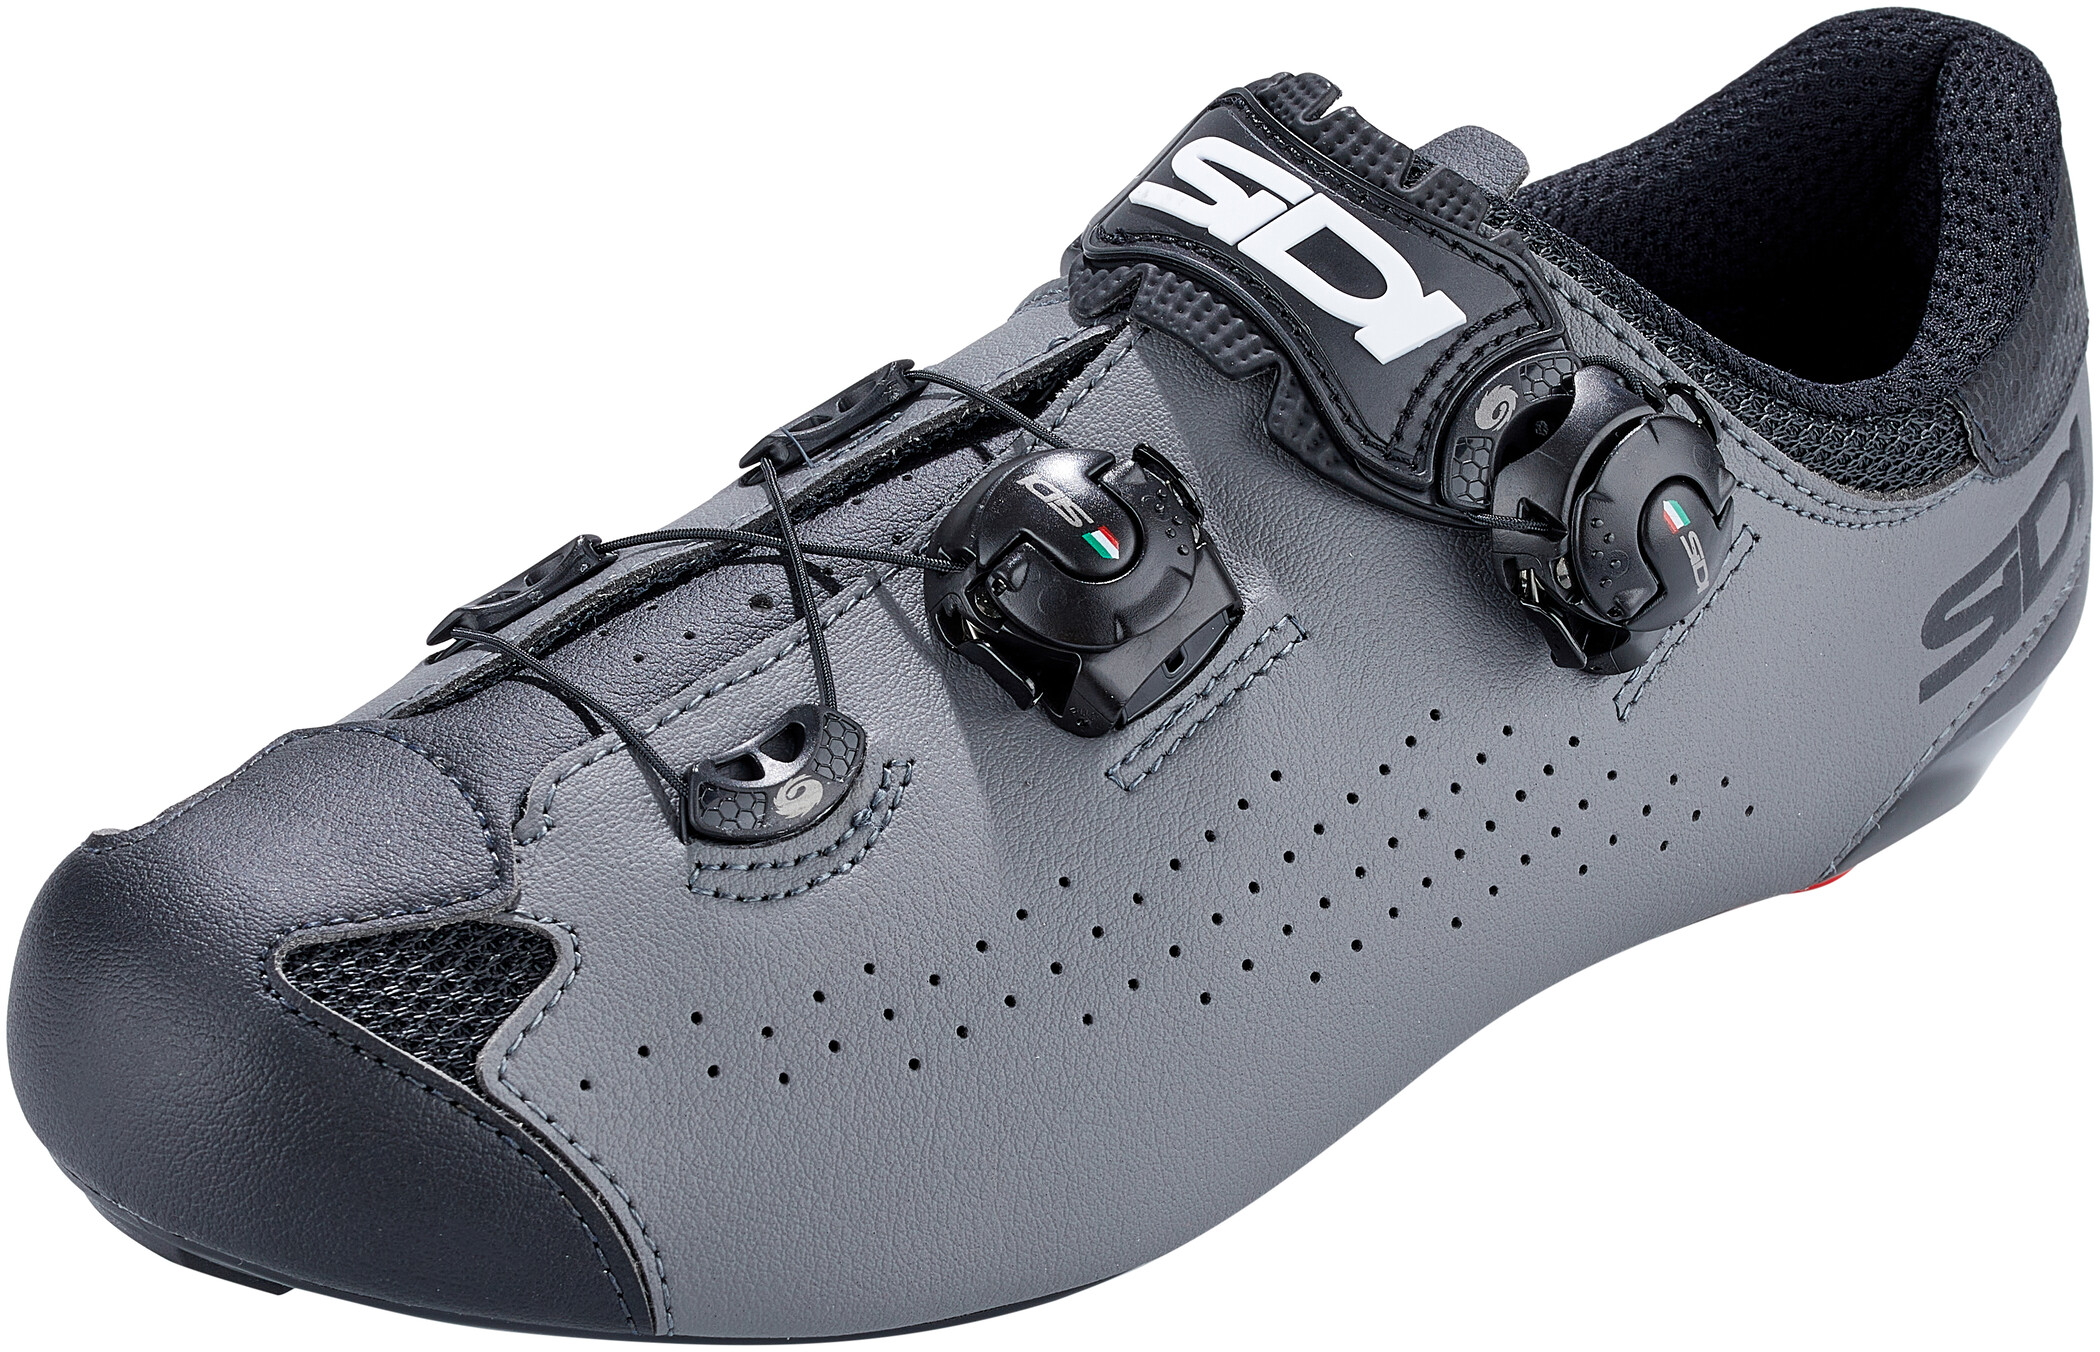 Sidi Genius 10 Mega Schuhe Herren online kaufen | bikester.ch